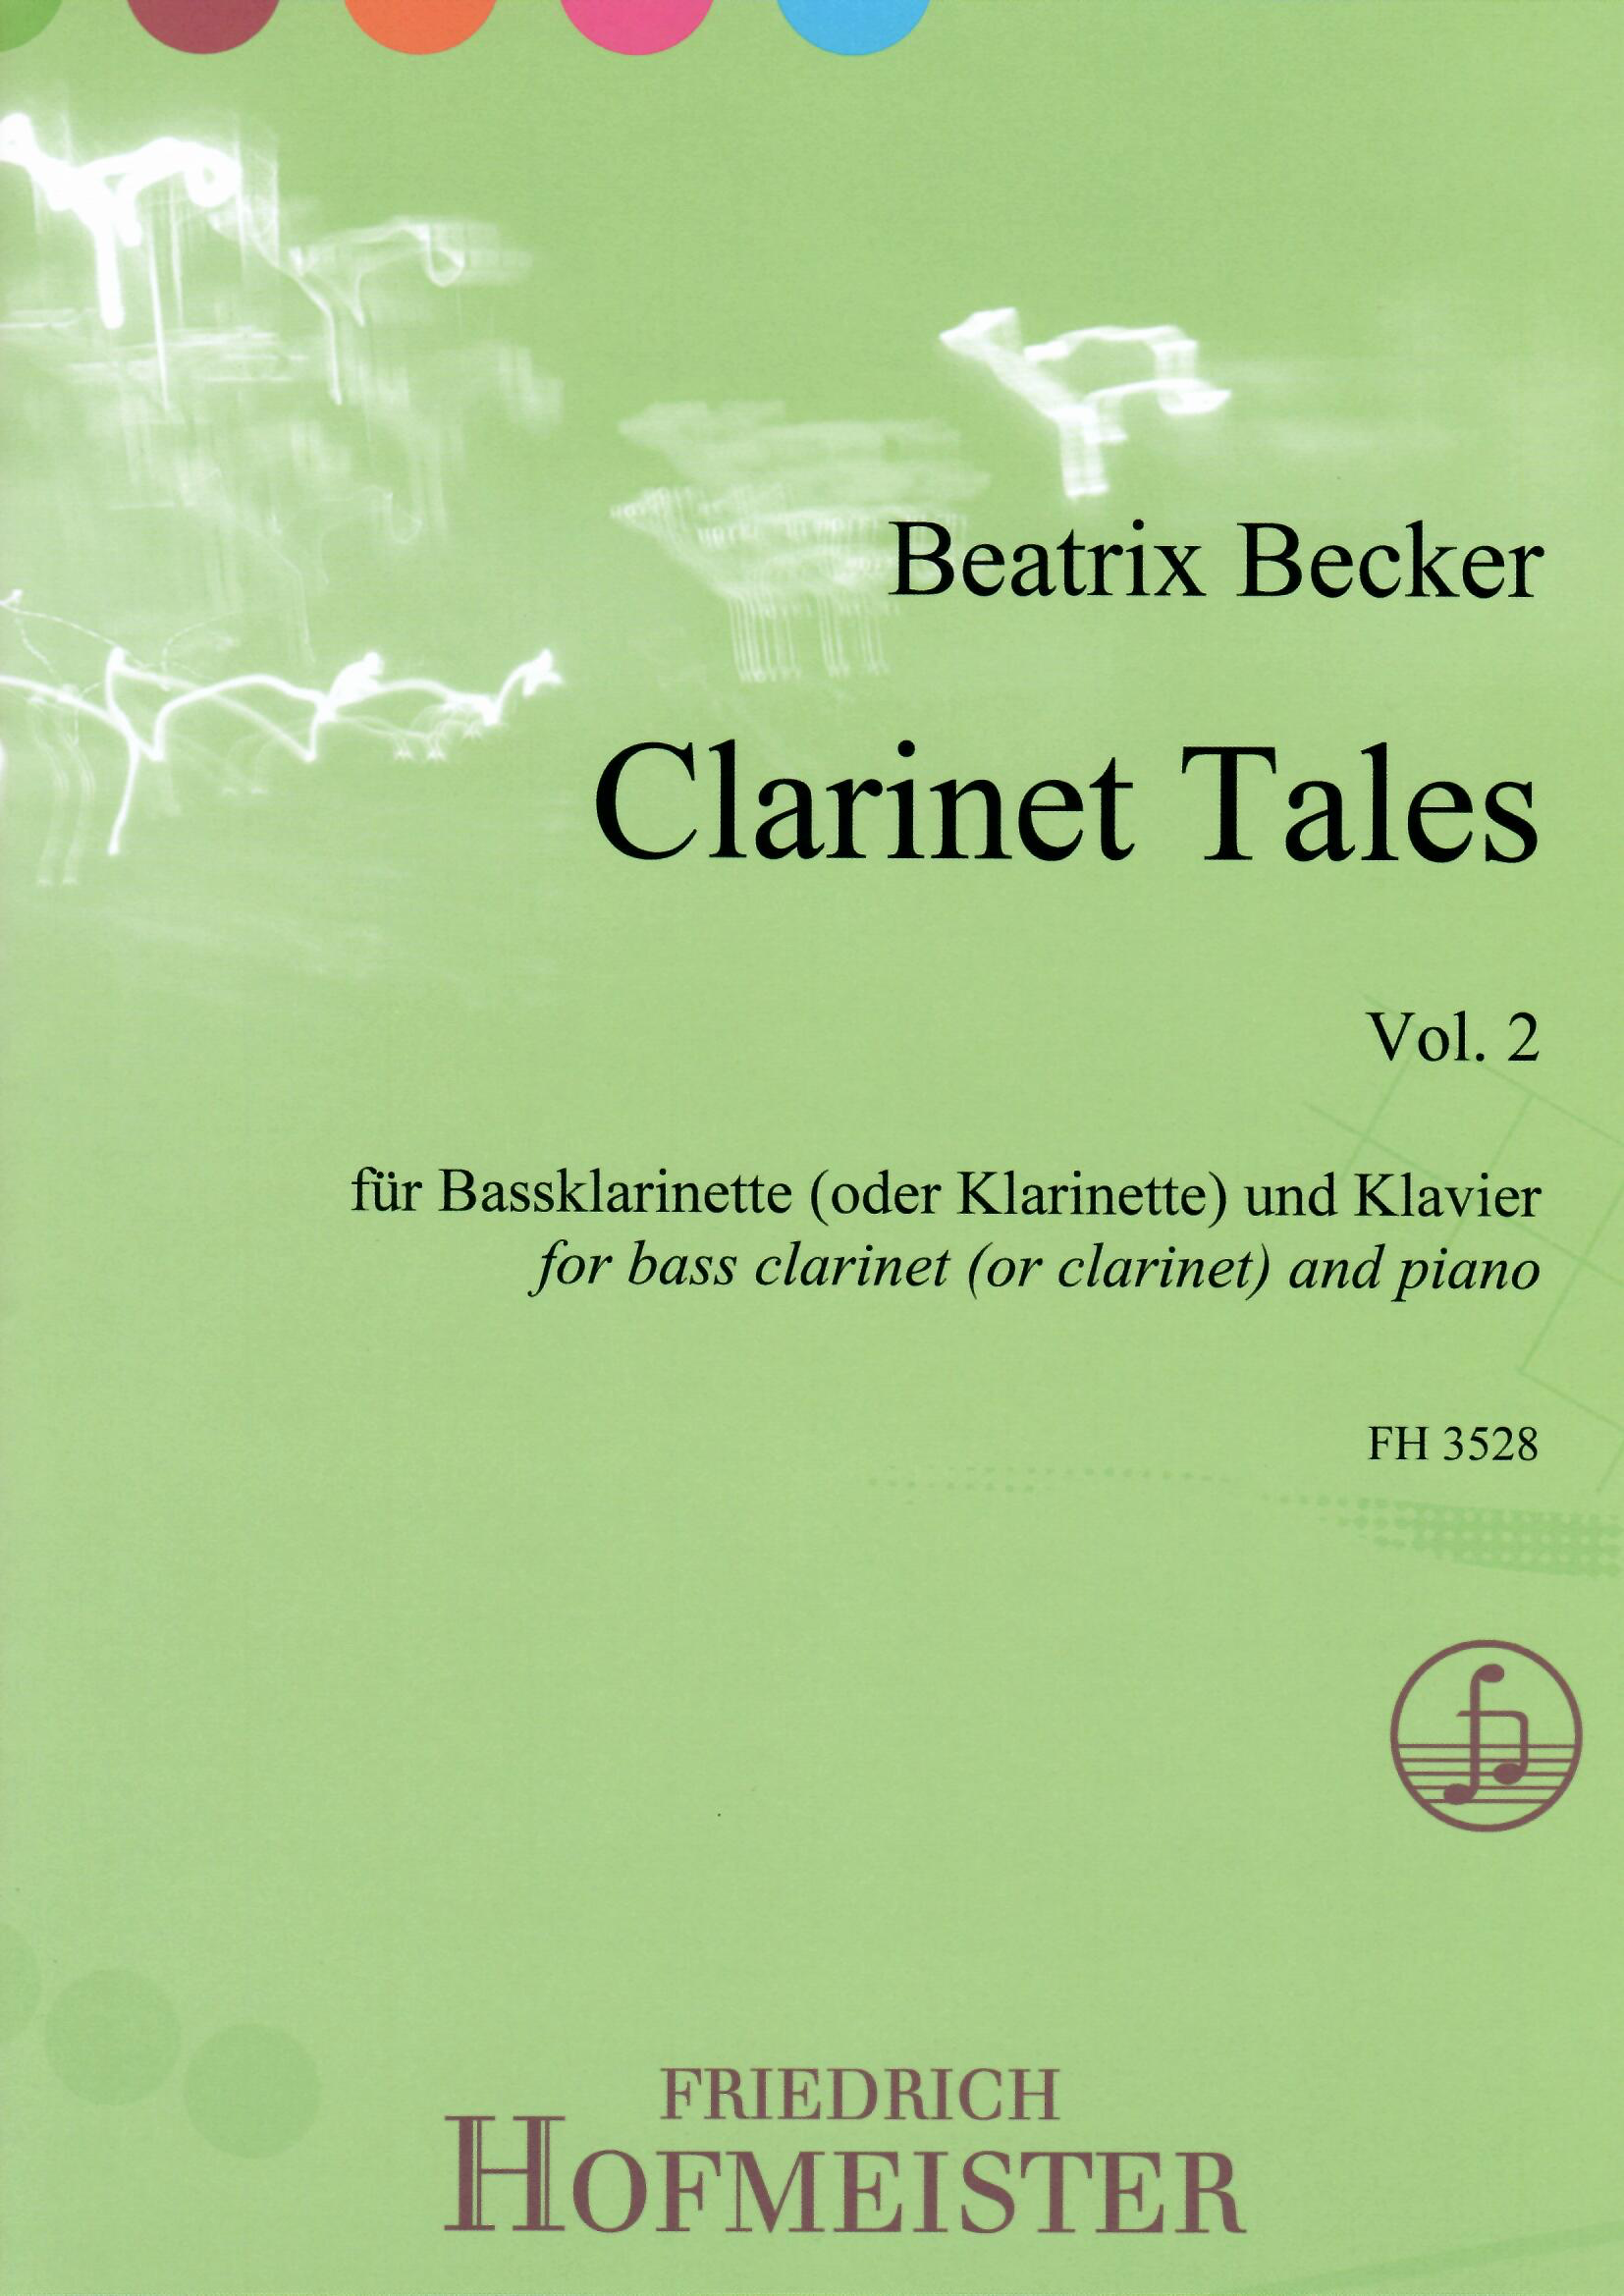 Clarinet Tales Vol. 2